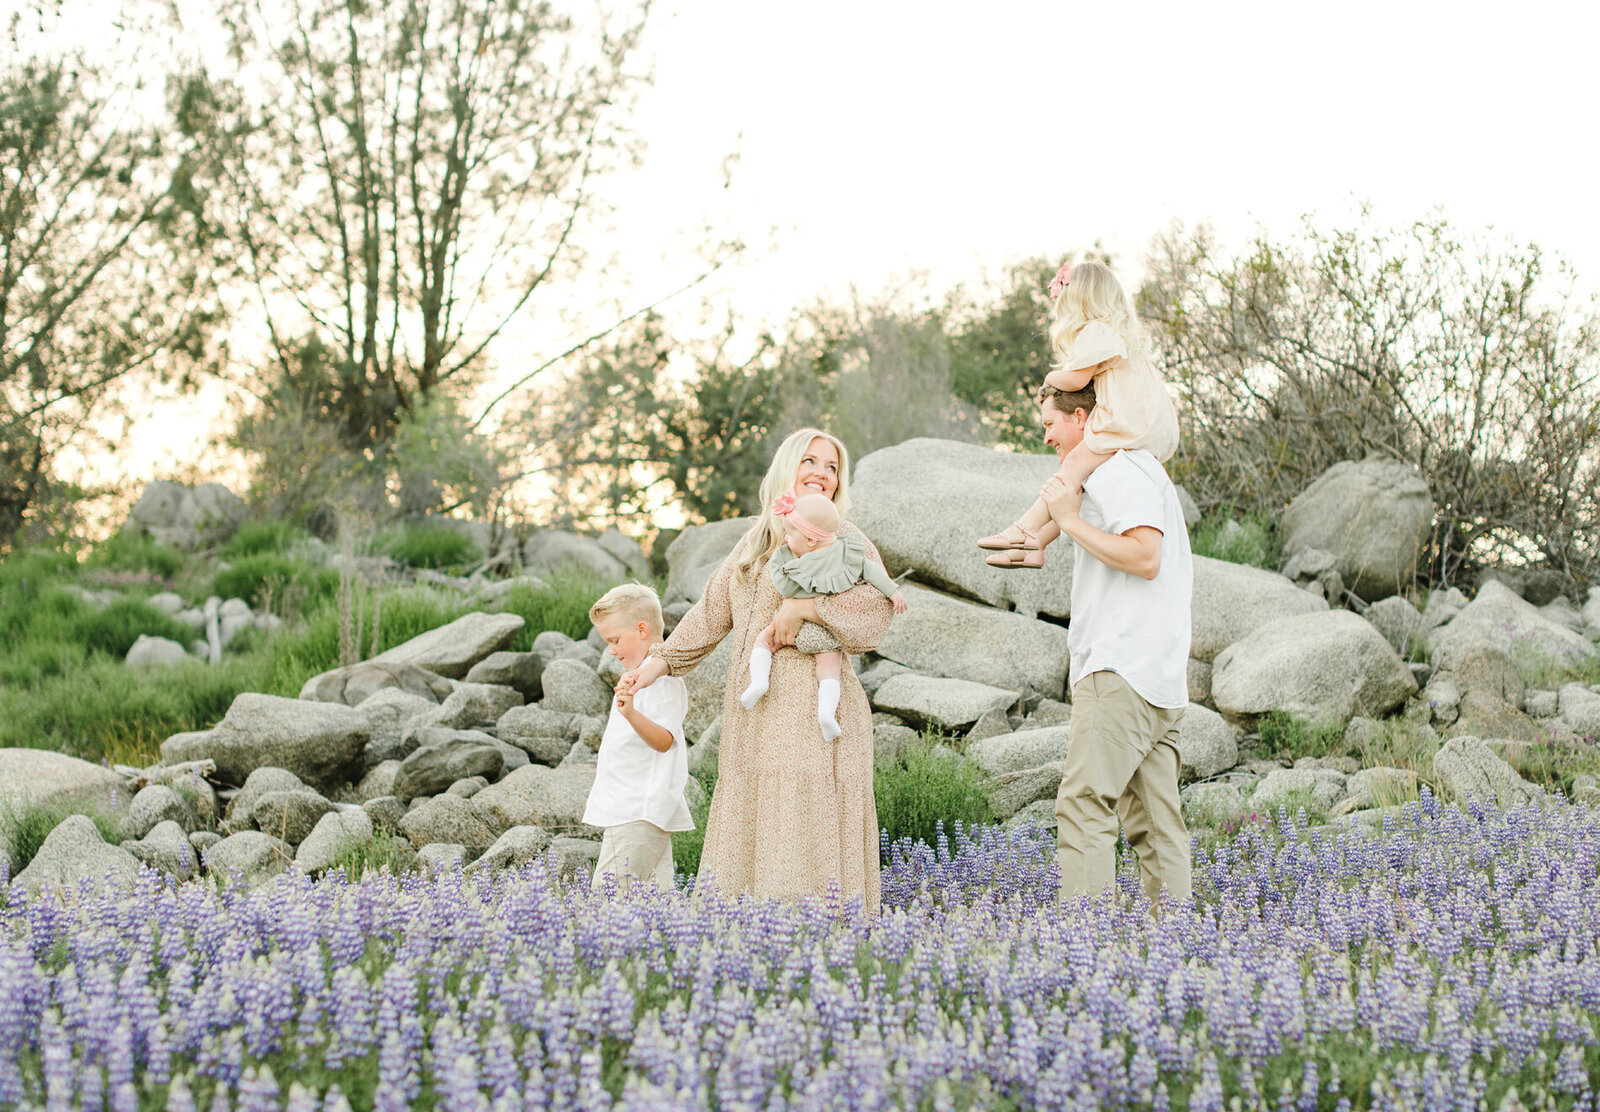 A family walking through a Lavender field in San Francisco Bay Area